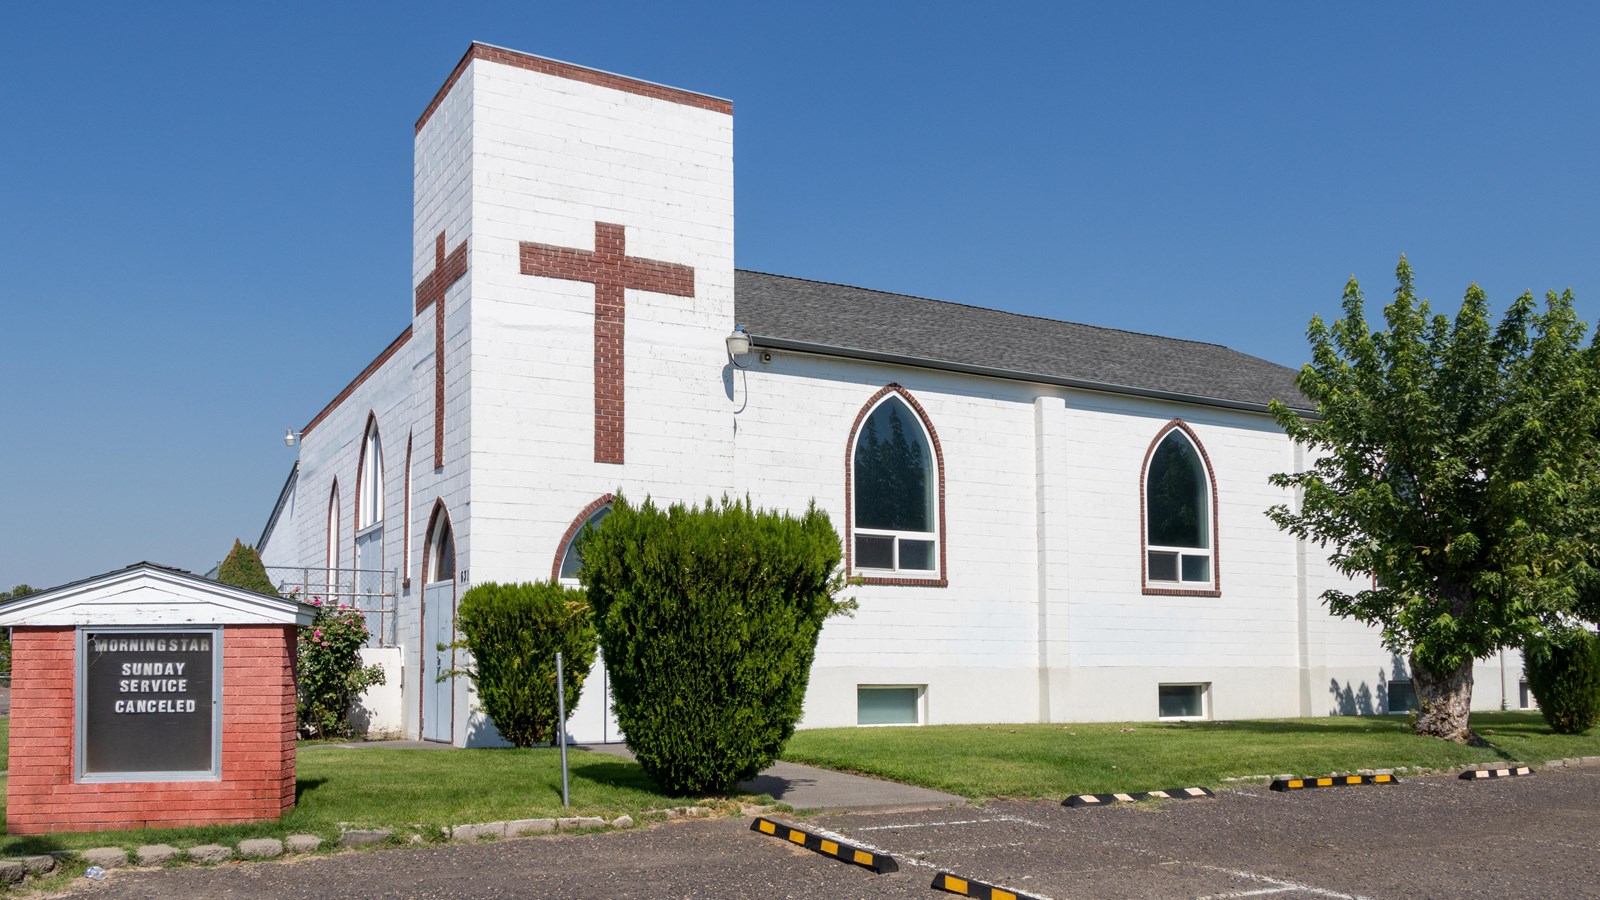 Color photograph of a white brick church. The church has 10 oval windows.